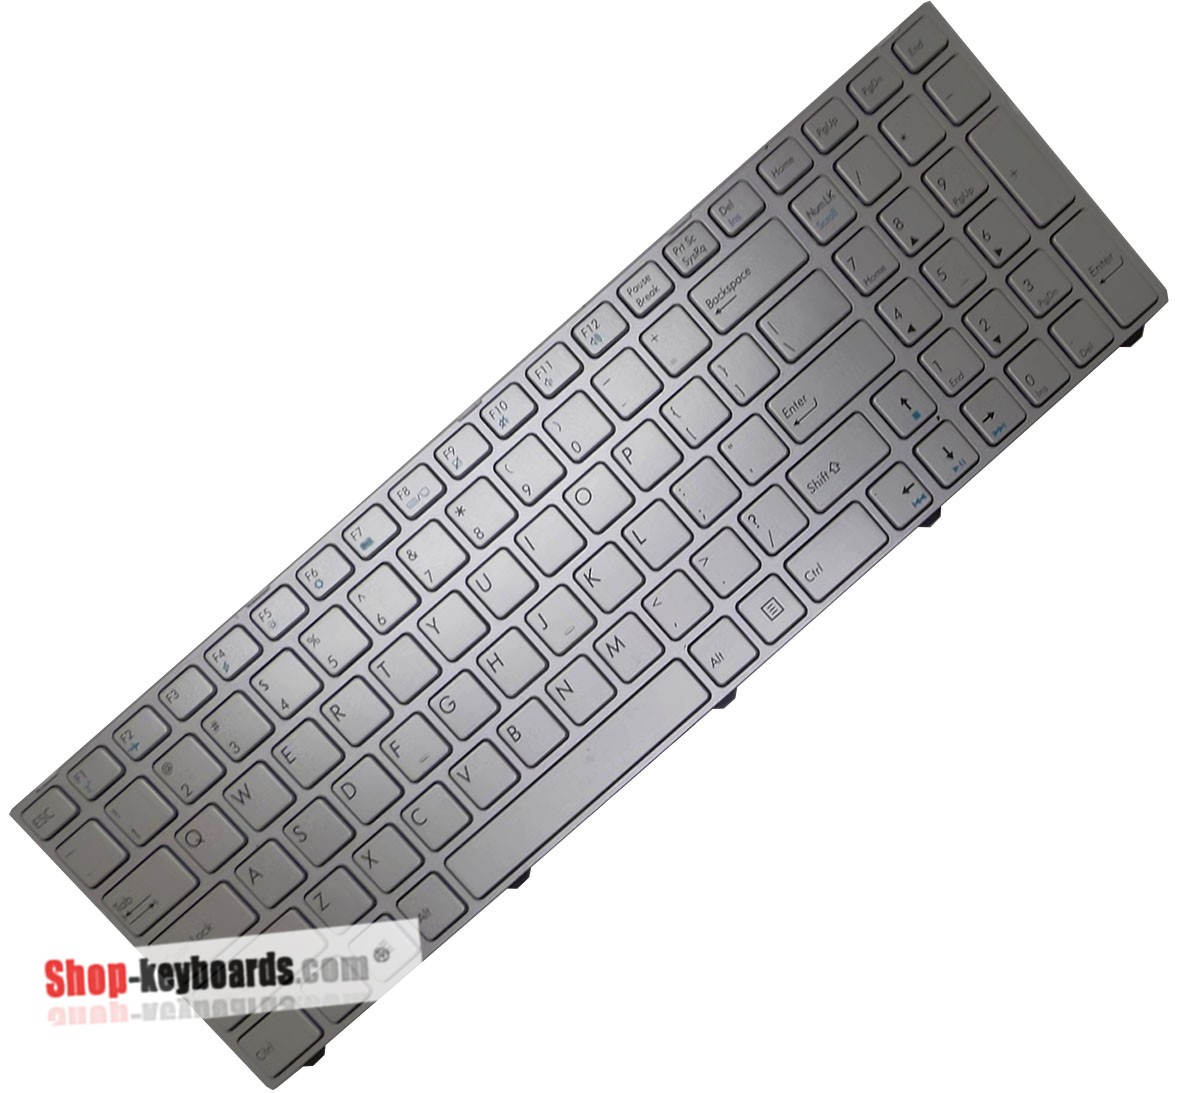 Medion Erazer MD99963 Keyboard replacement